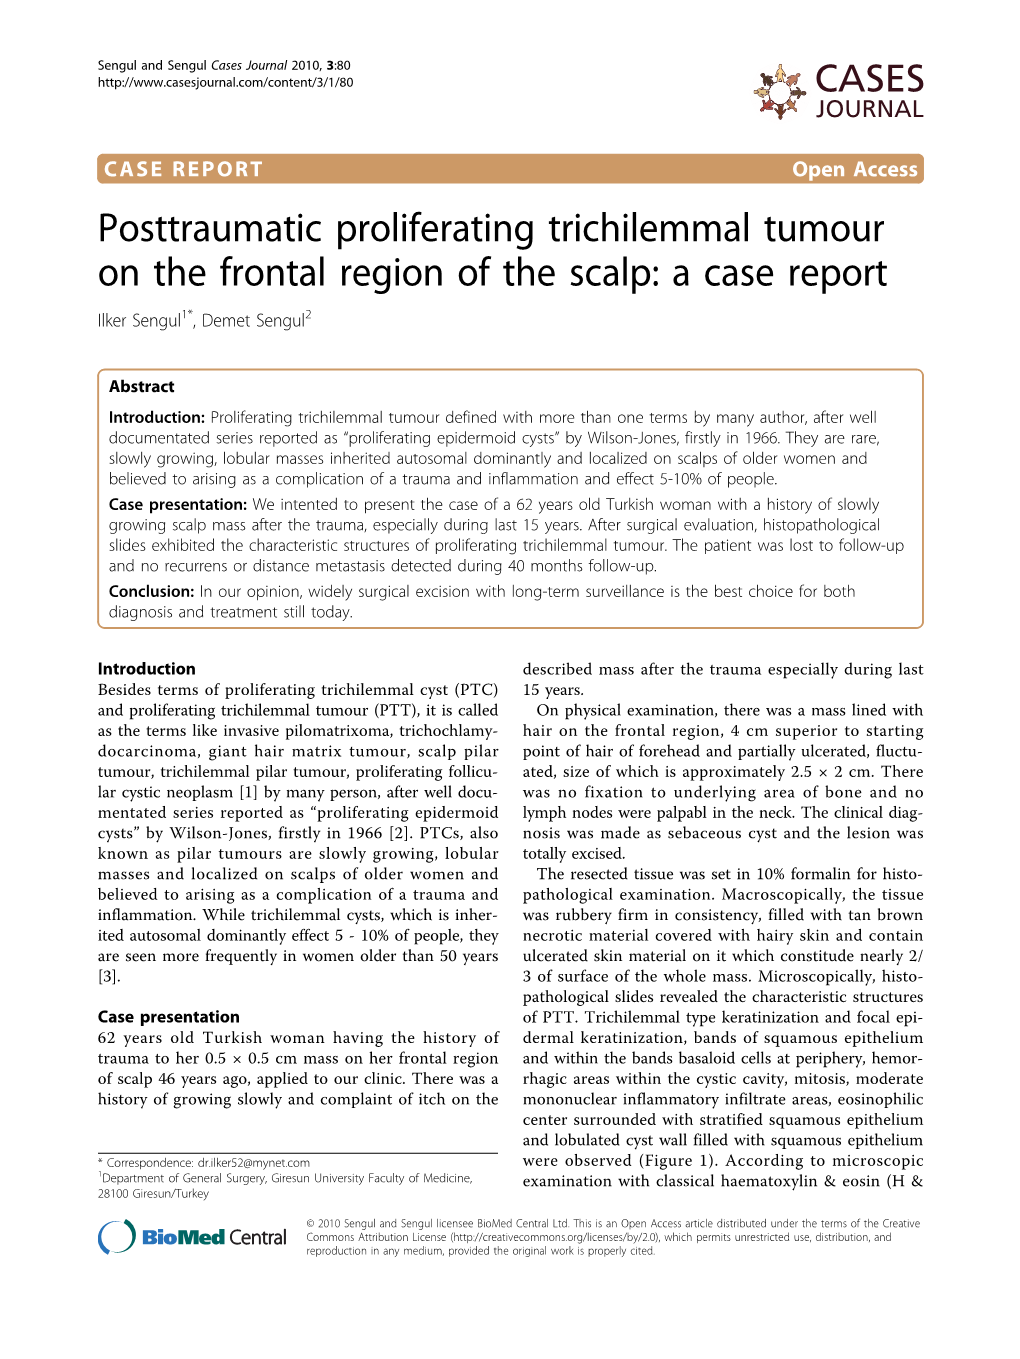 Posttraumatic Proliferating Trichilemmal Tumour on the Frontal Region of the Scalp: a Case Report Ilker Sengul1*, Demet Sengul2